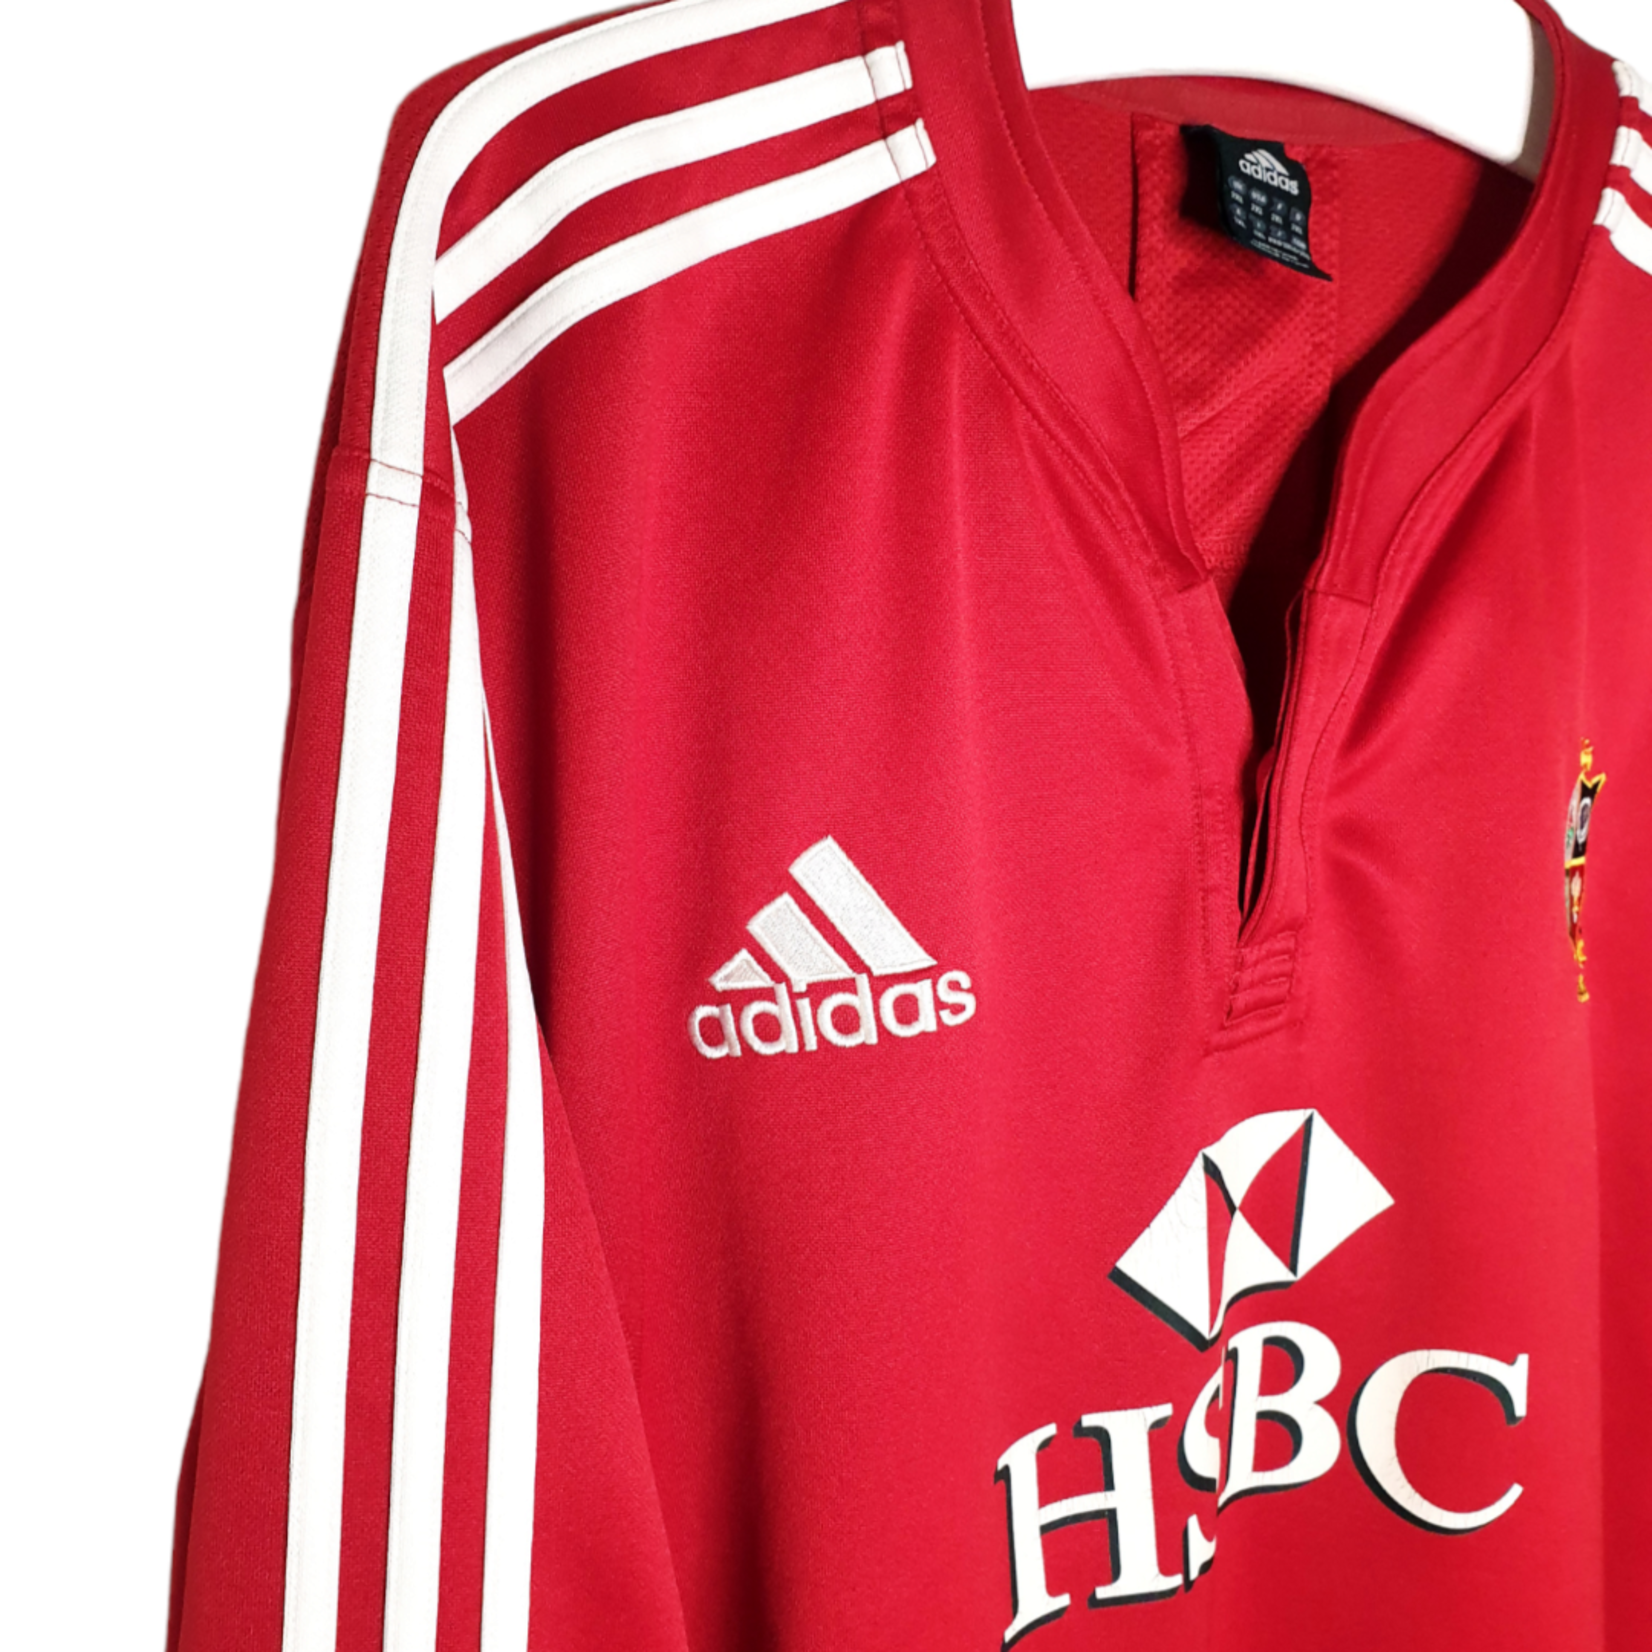 Adidas Origineel Adidas vintage rugby shirt British & Irish Lions 2009